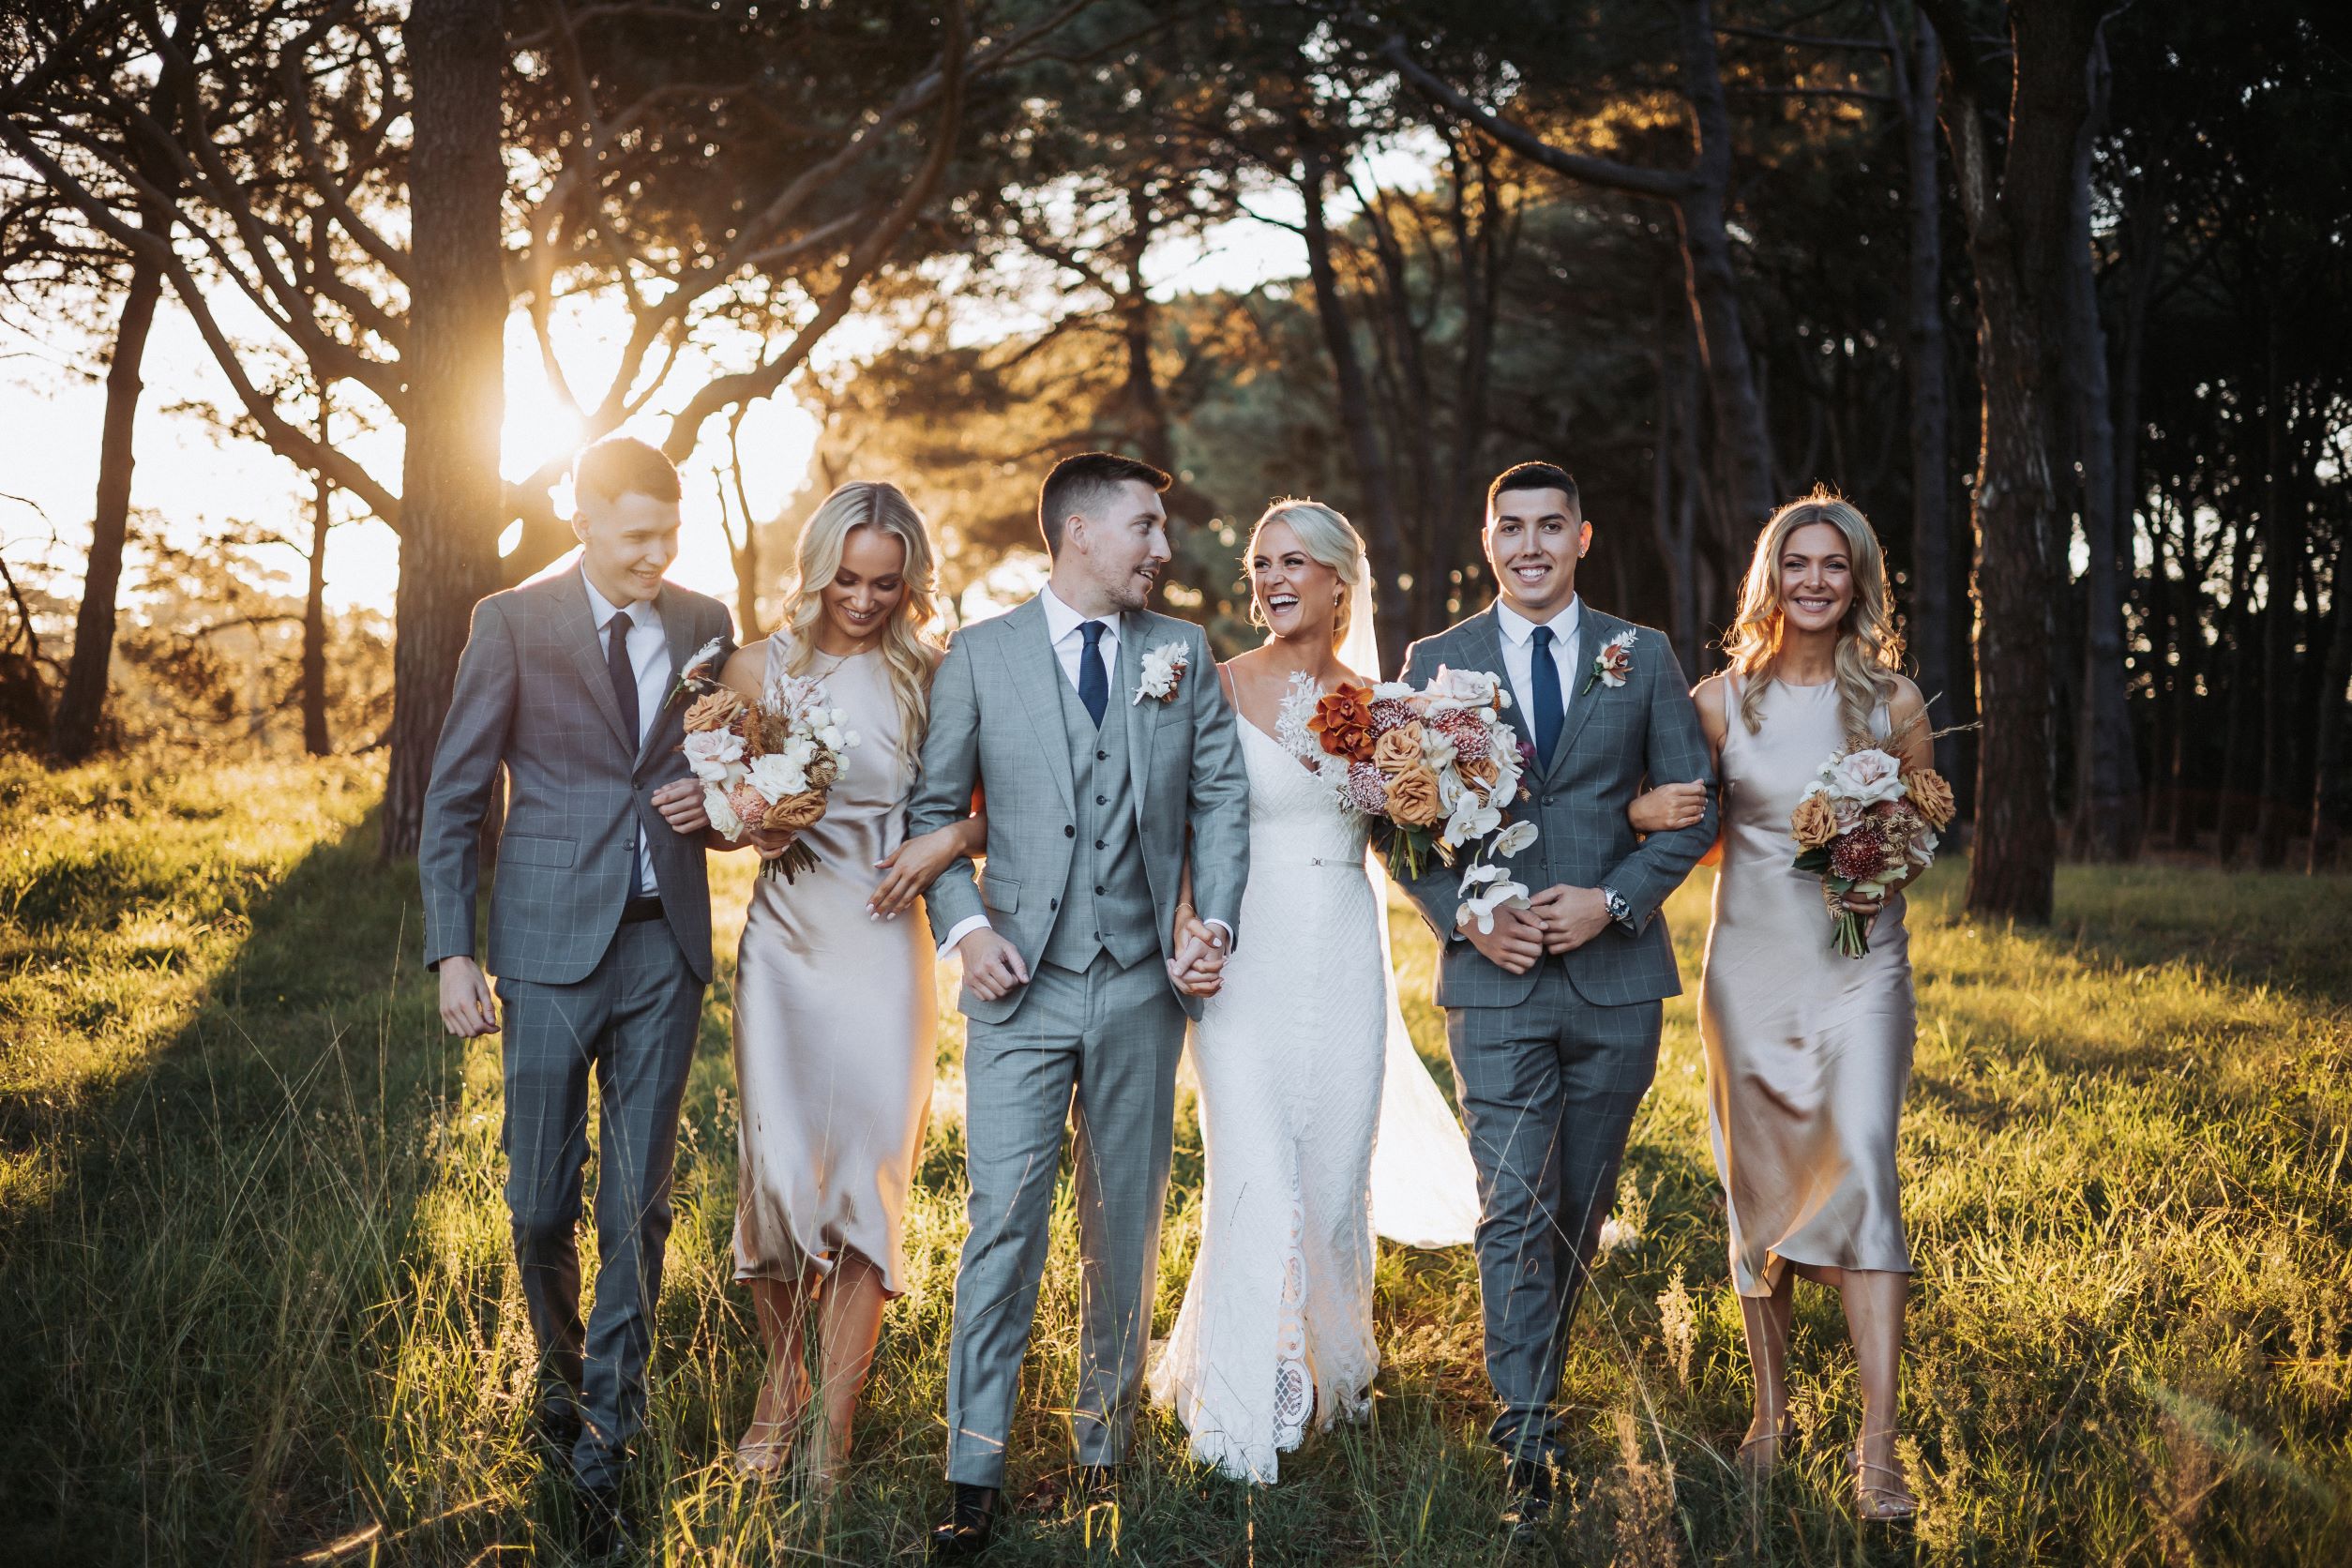 Real brides share wedding budget tips